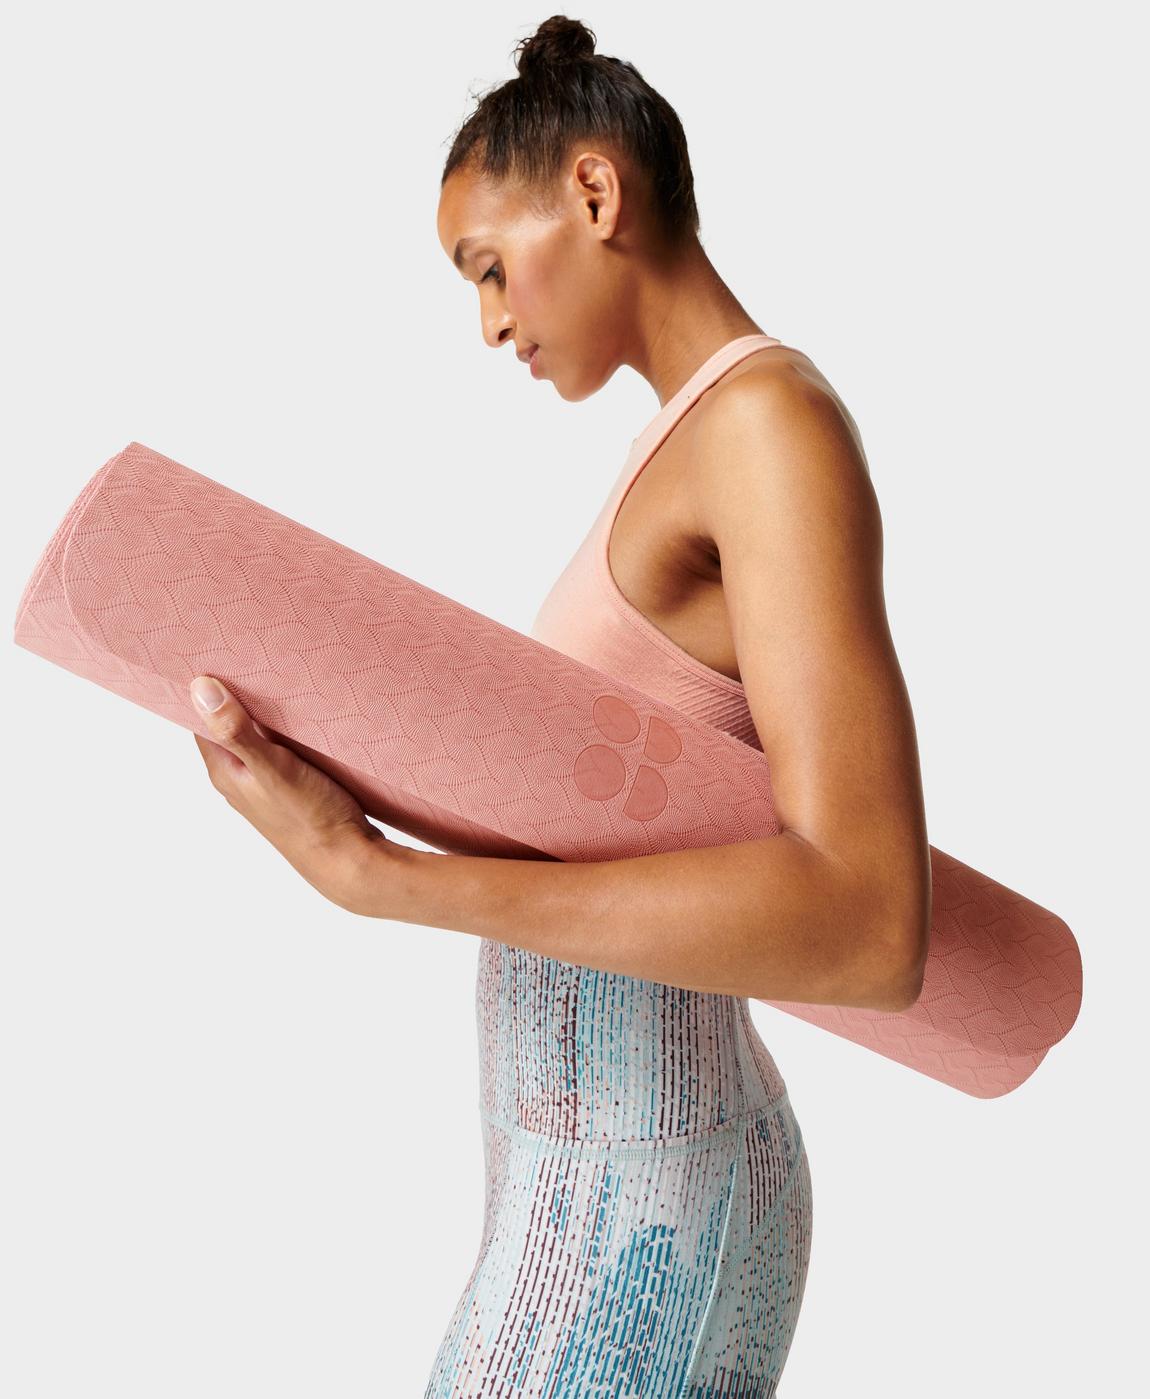 Flow Yoga Mat - Bloom Pink, Women's Yoga Mats